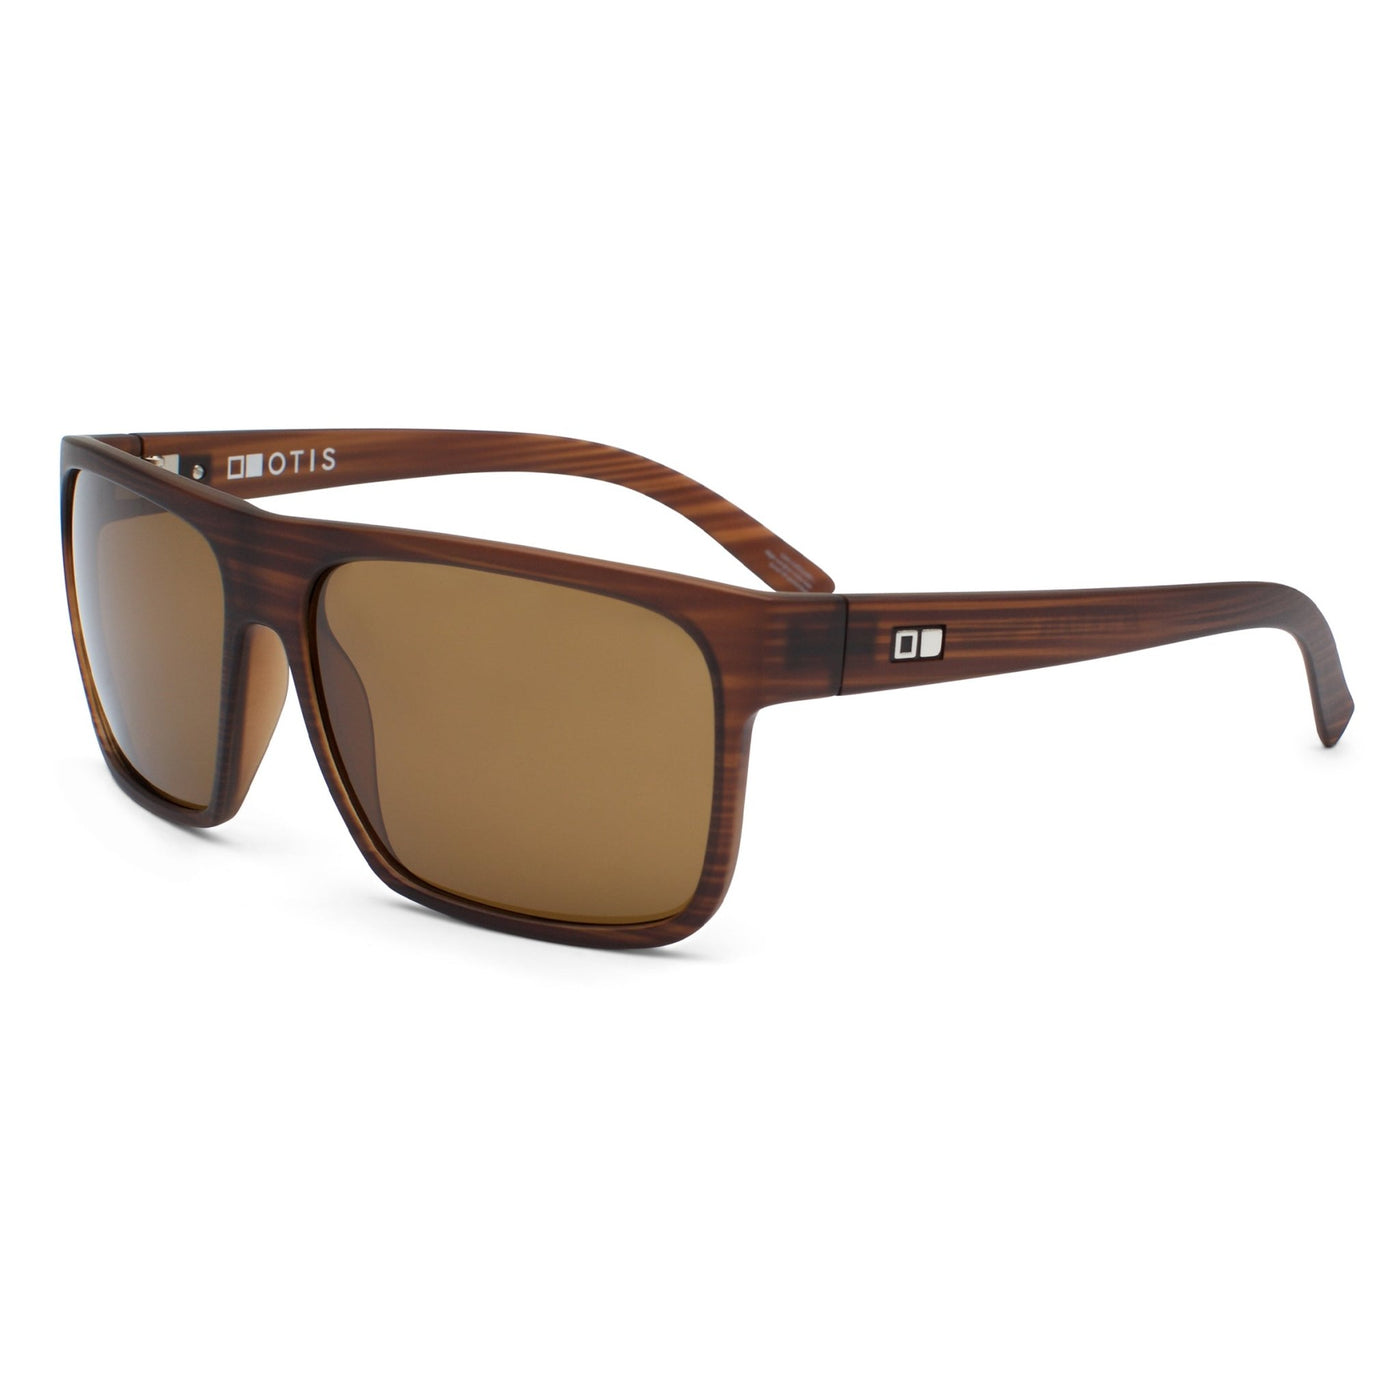 Brown OTIS sunglasses facing the side